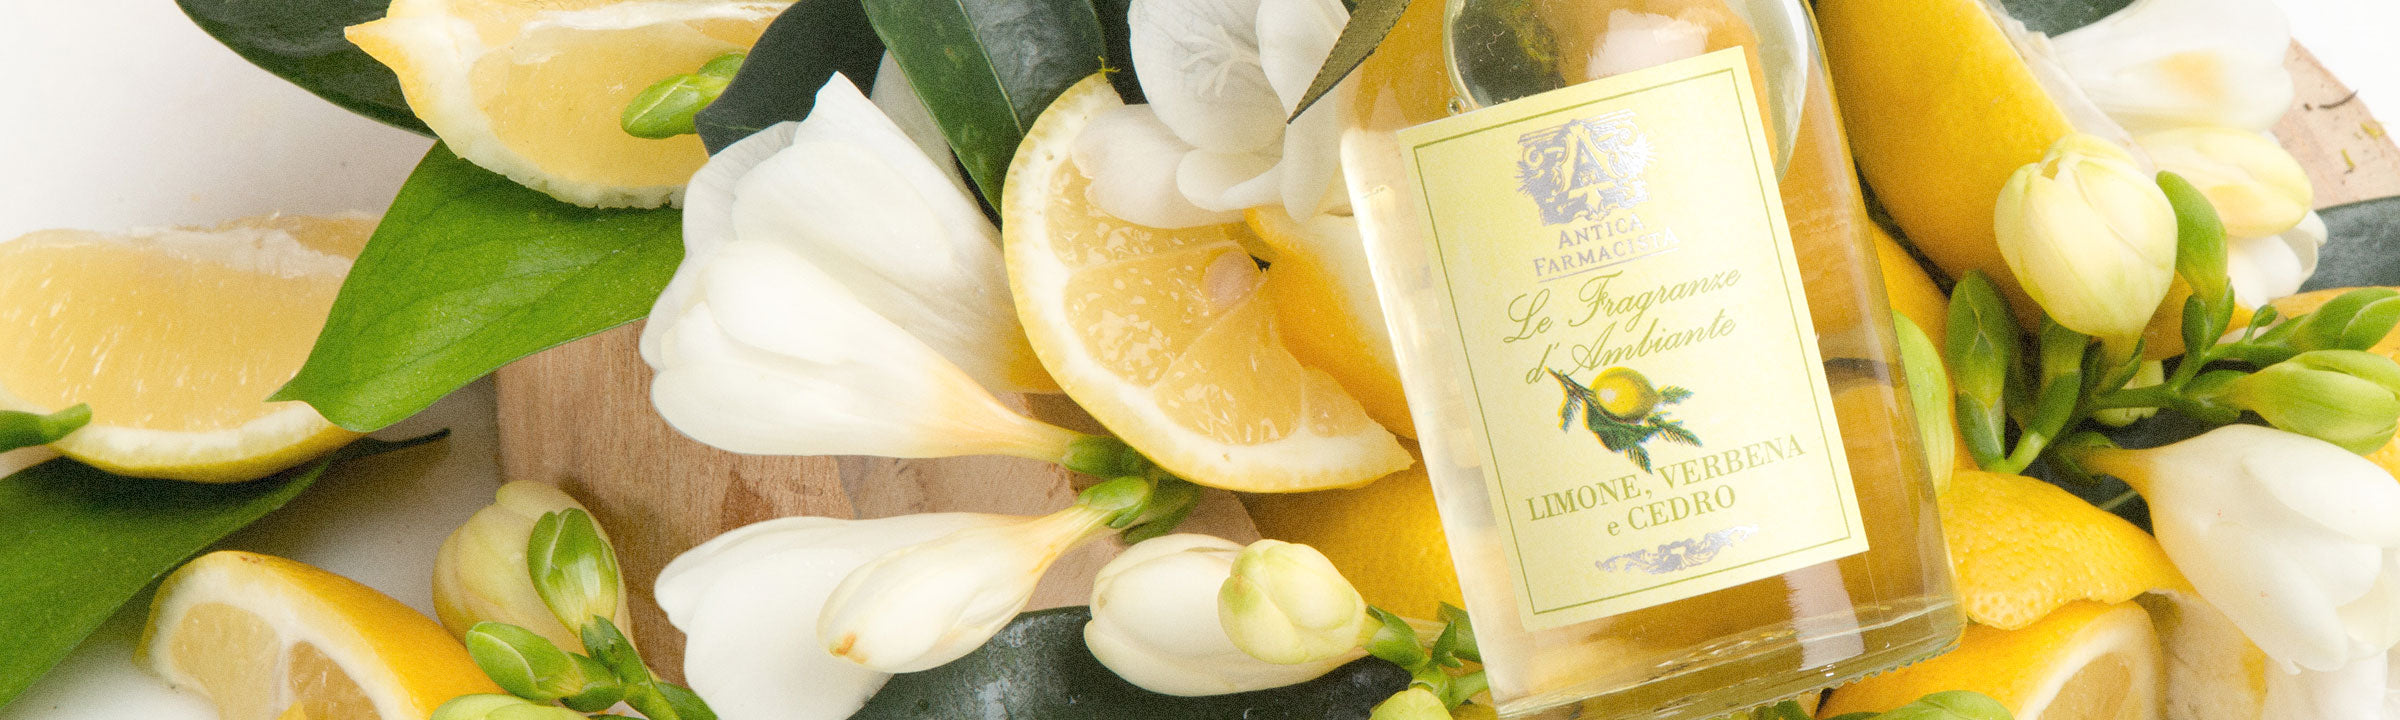 Lemon Verbena Fragrance Oil, 10 ml Premium, Long Lasting Diffuser Oils –  Eclectic Lady